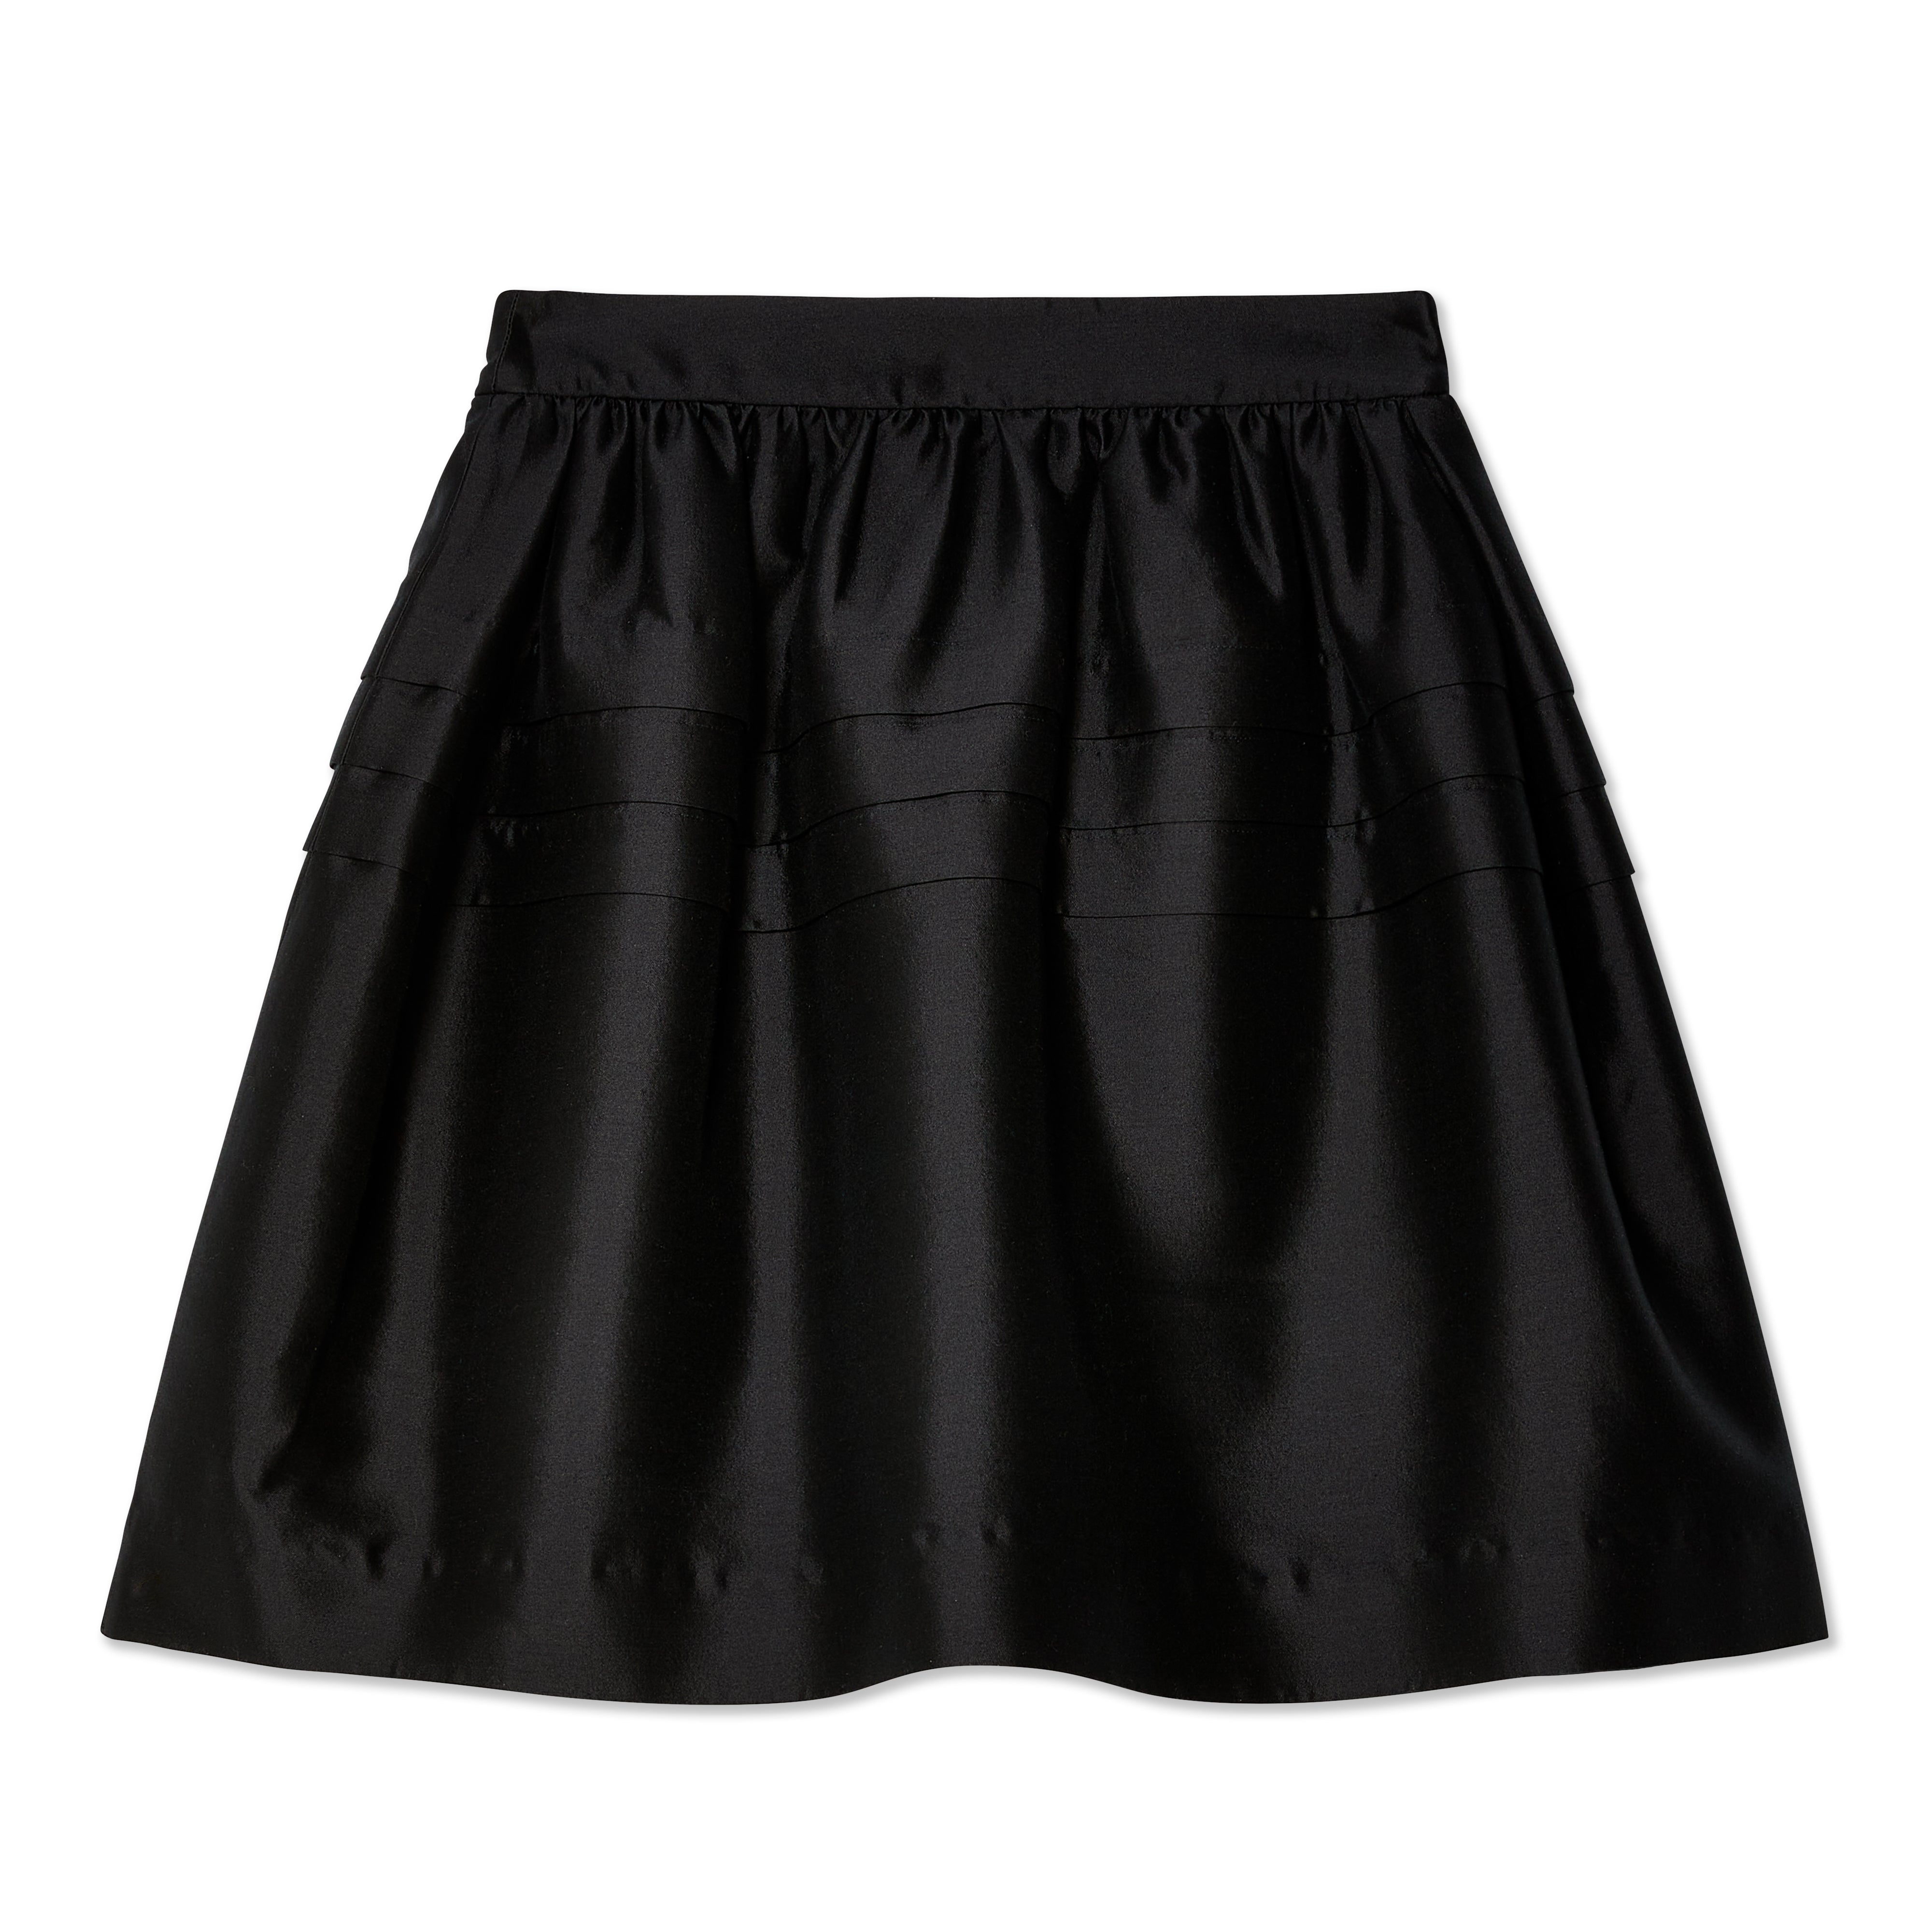 ShuShu/Tong - Women's Puffy Skirt - (Black) – DSMNY E-SHOP